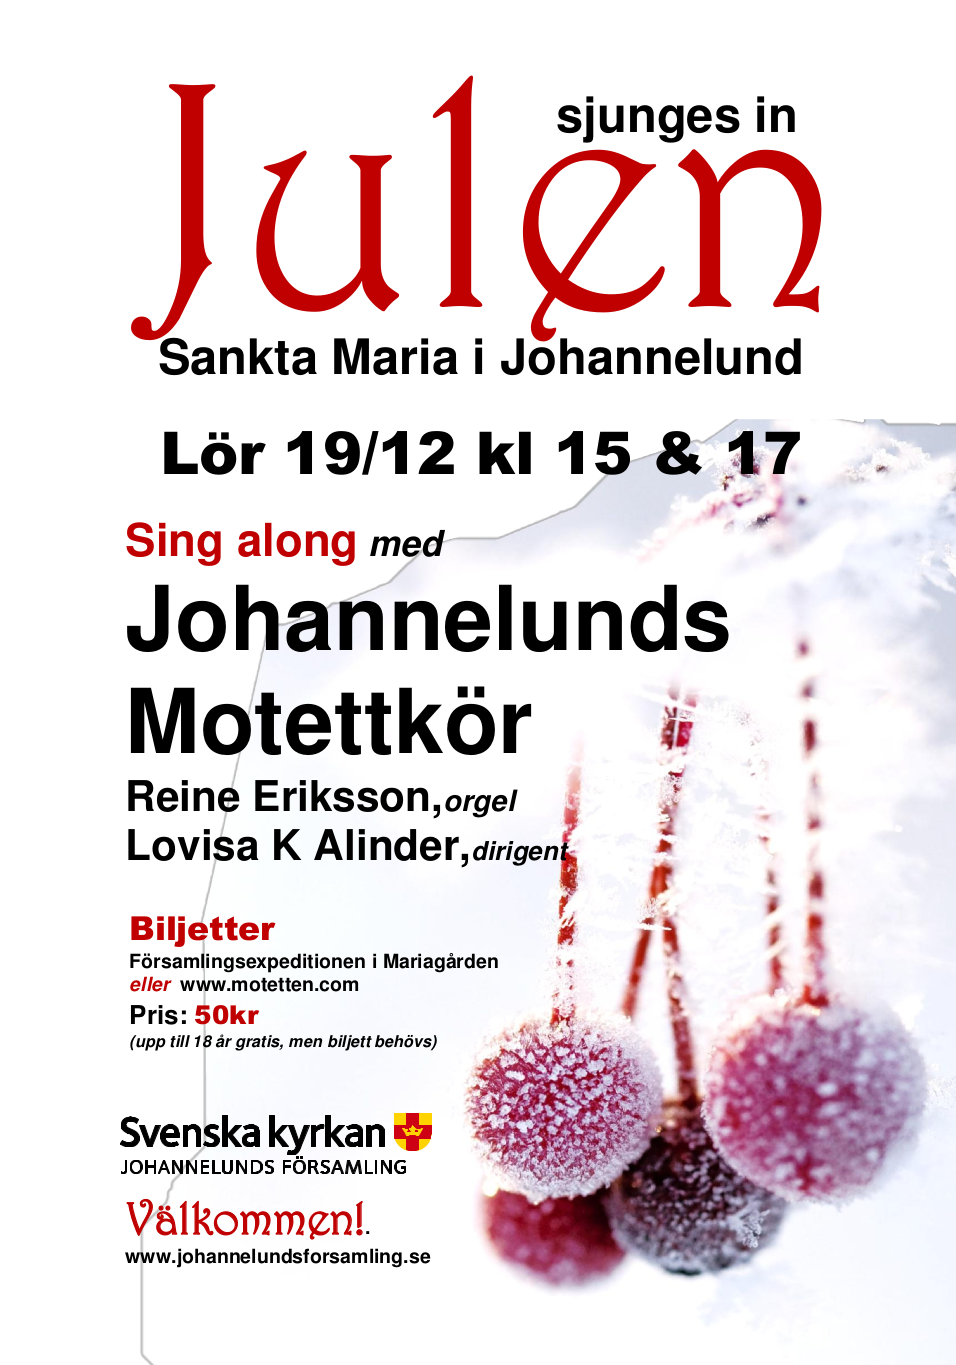 /static/images/affischer/151219-motetten-julen-sjunges-in.png